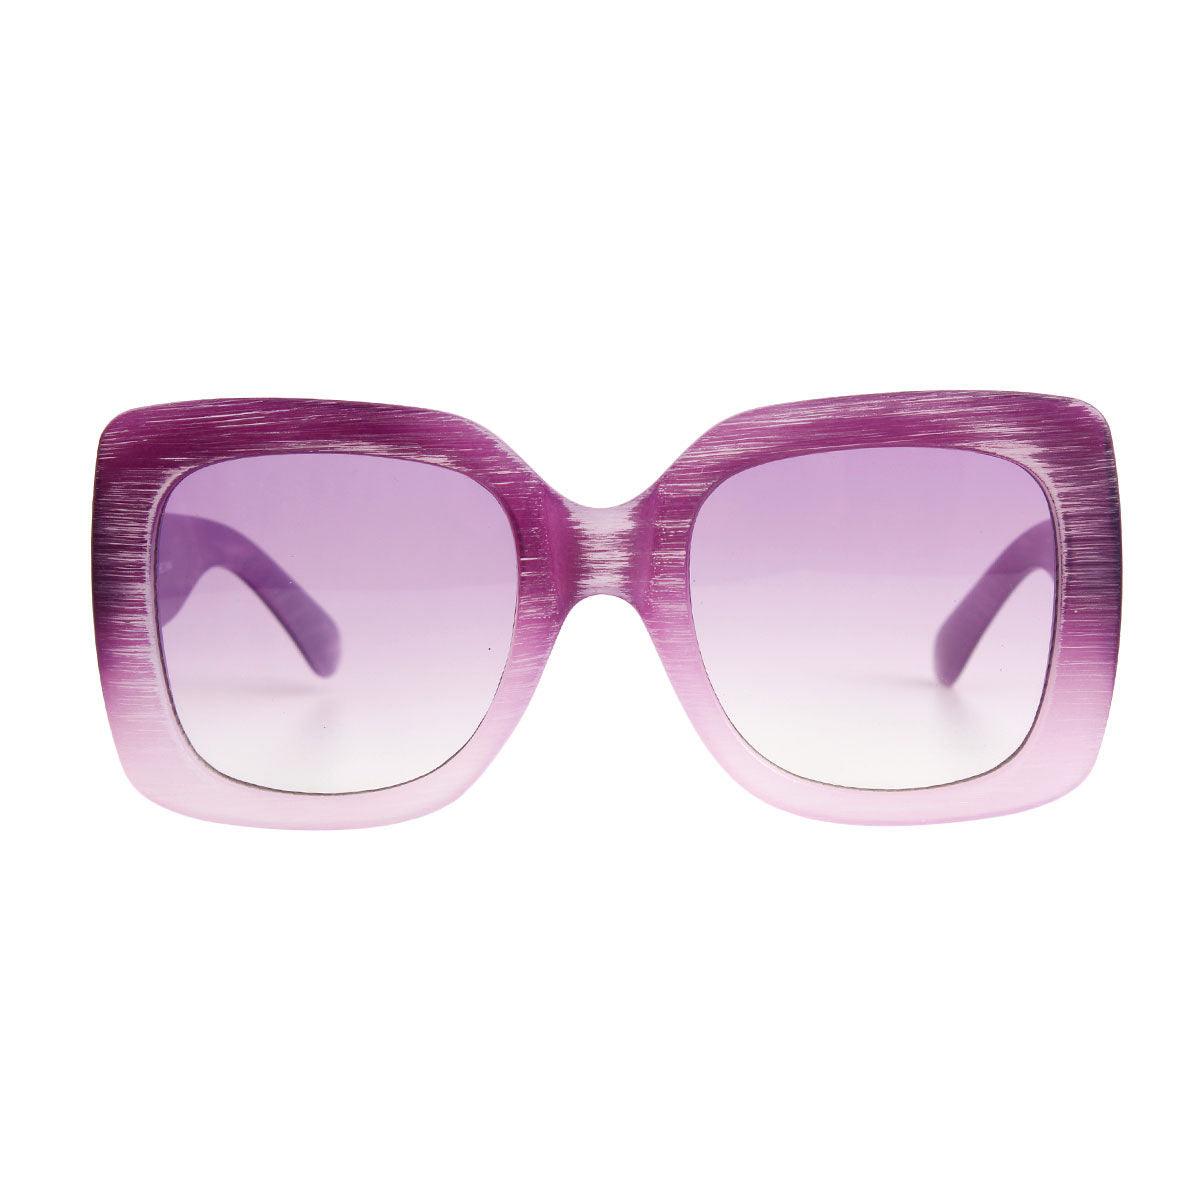 Sunglasses Women Candy Color Purple Plastic Square